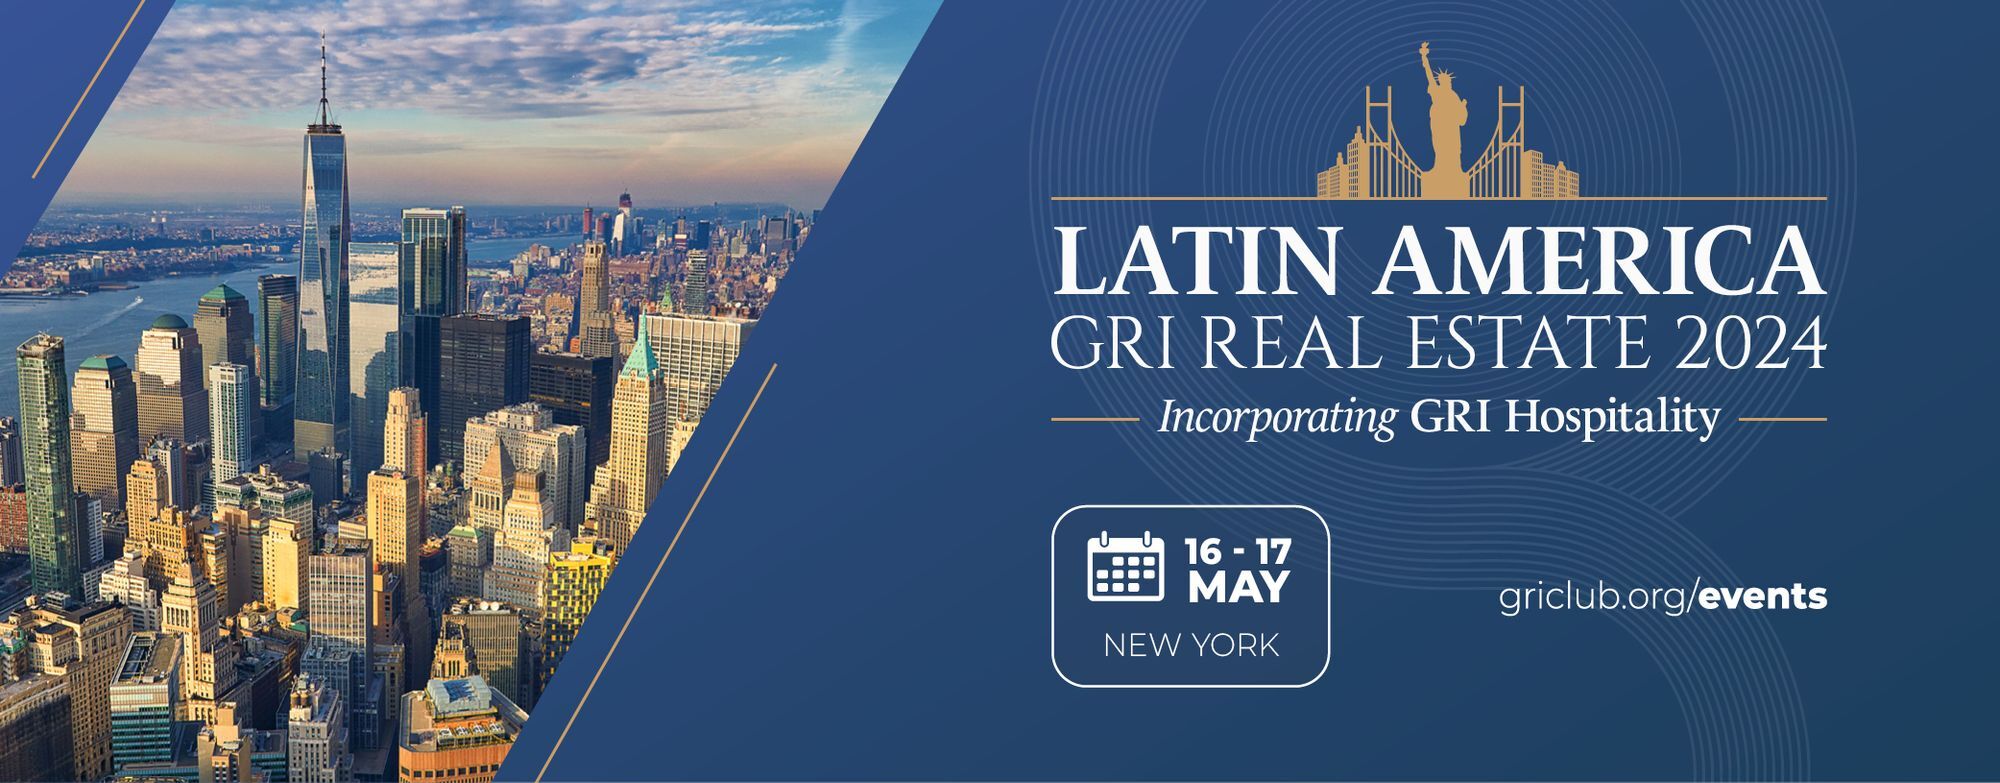 Latin America GRI Real Estate 2024